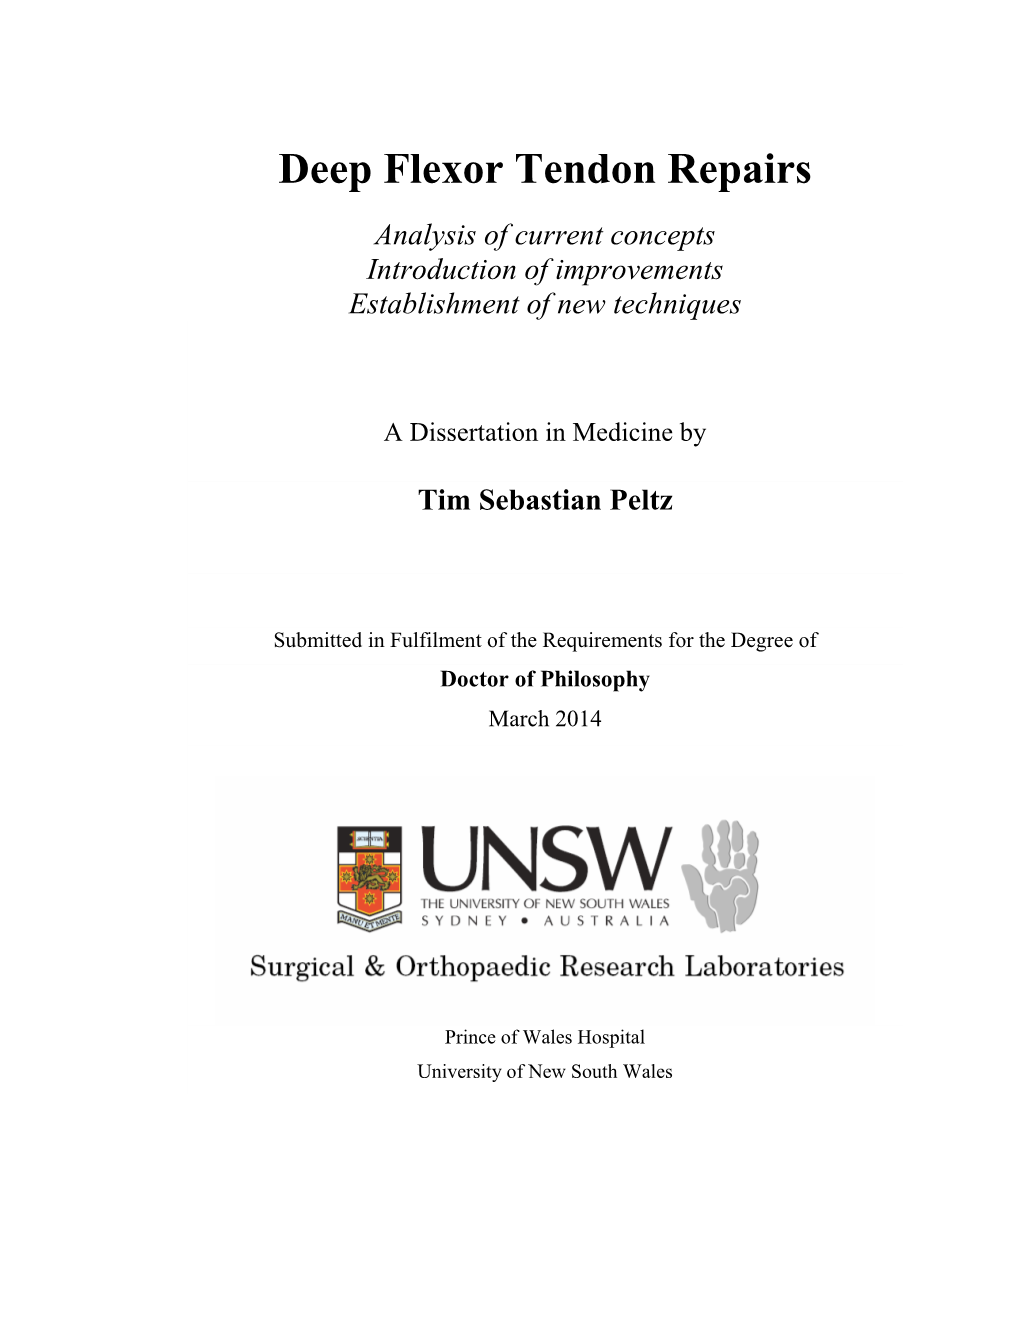 Deep Flexor Tendon Repairs Analysis of Current Concepts Introduction of Improvements Establishment of New Techniques